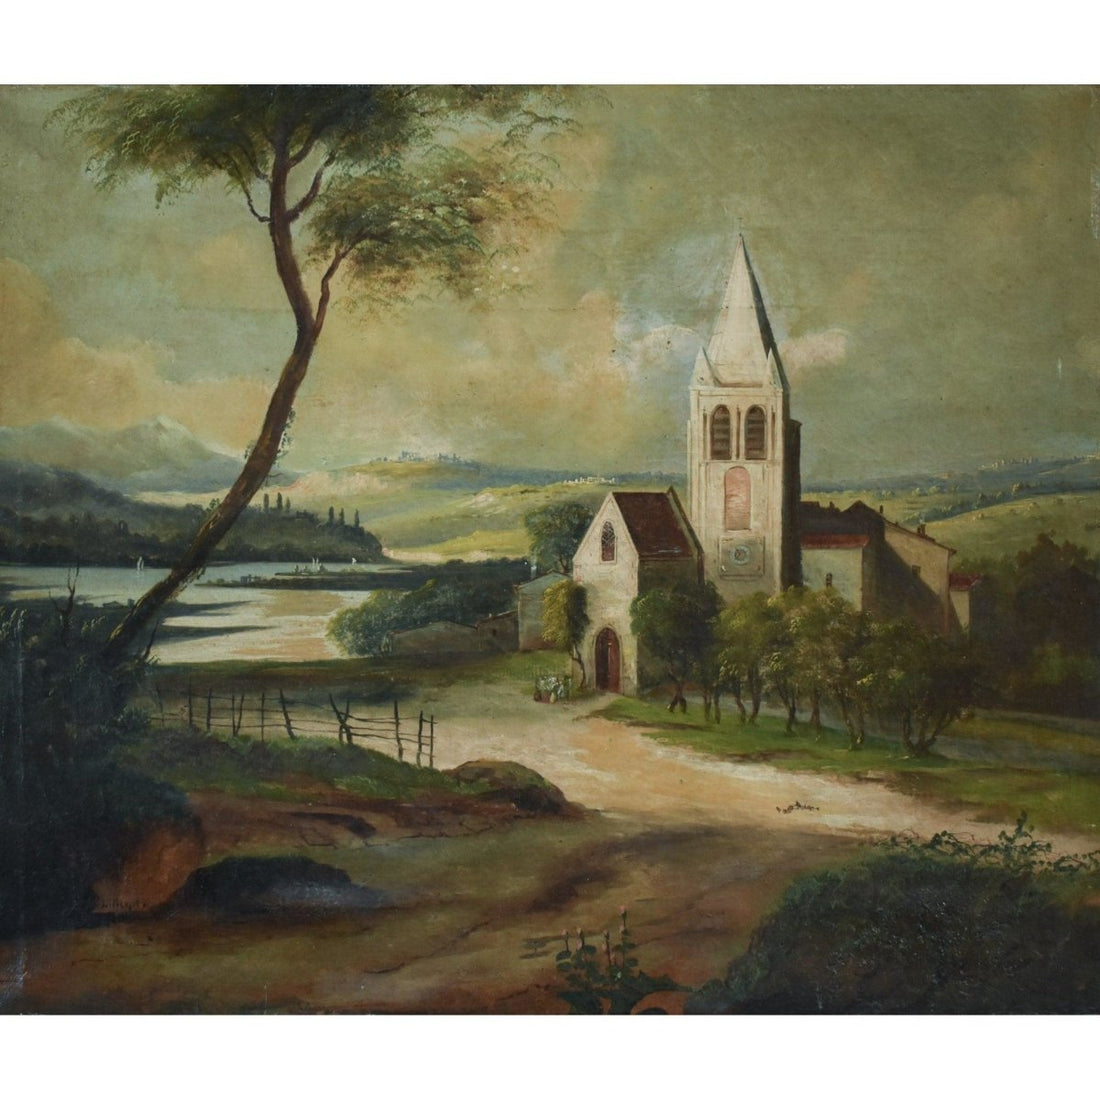 Landscape with a Church - Swiss School - Winckelmann Gallery